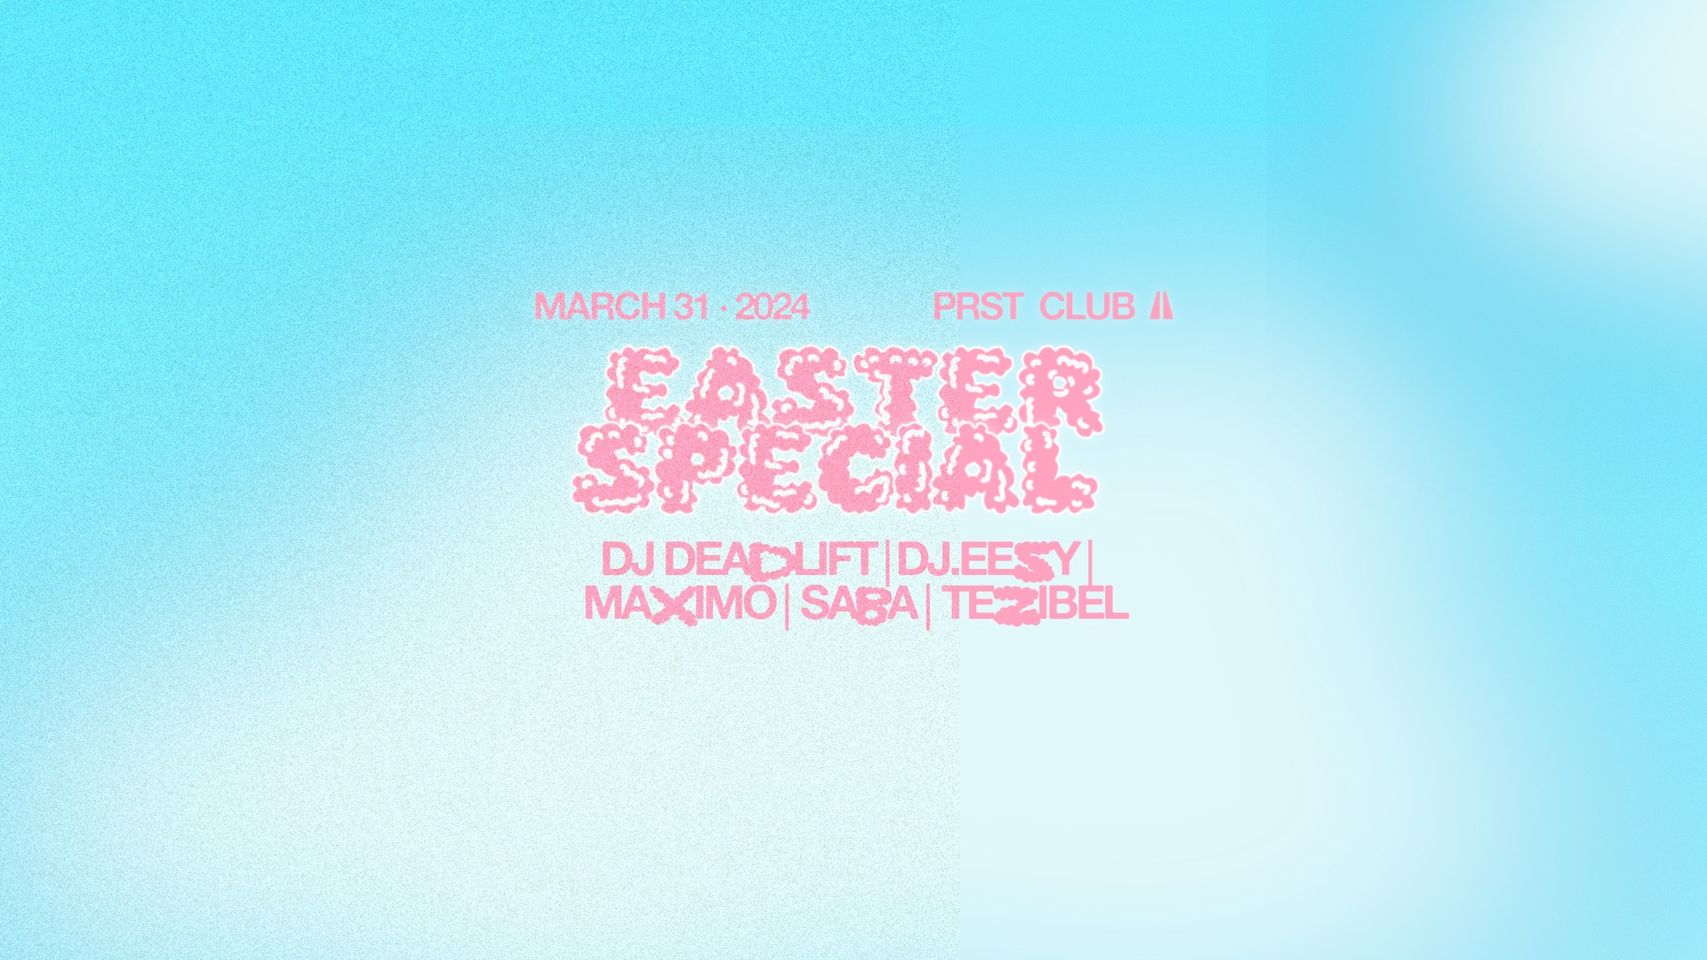 Easter Special am 31. March 2024 @ Praterstrasse / PRST.